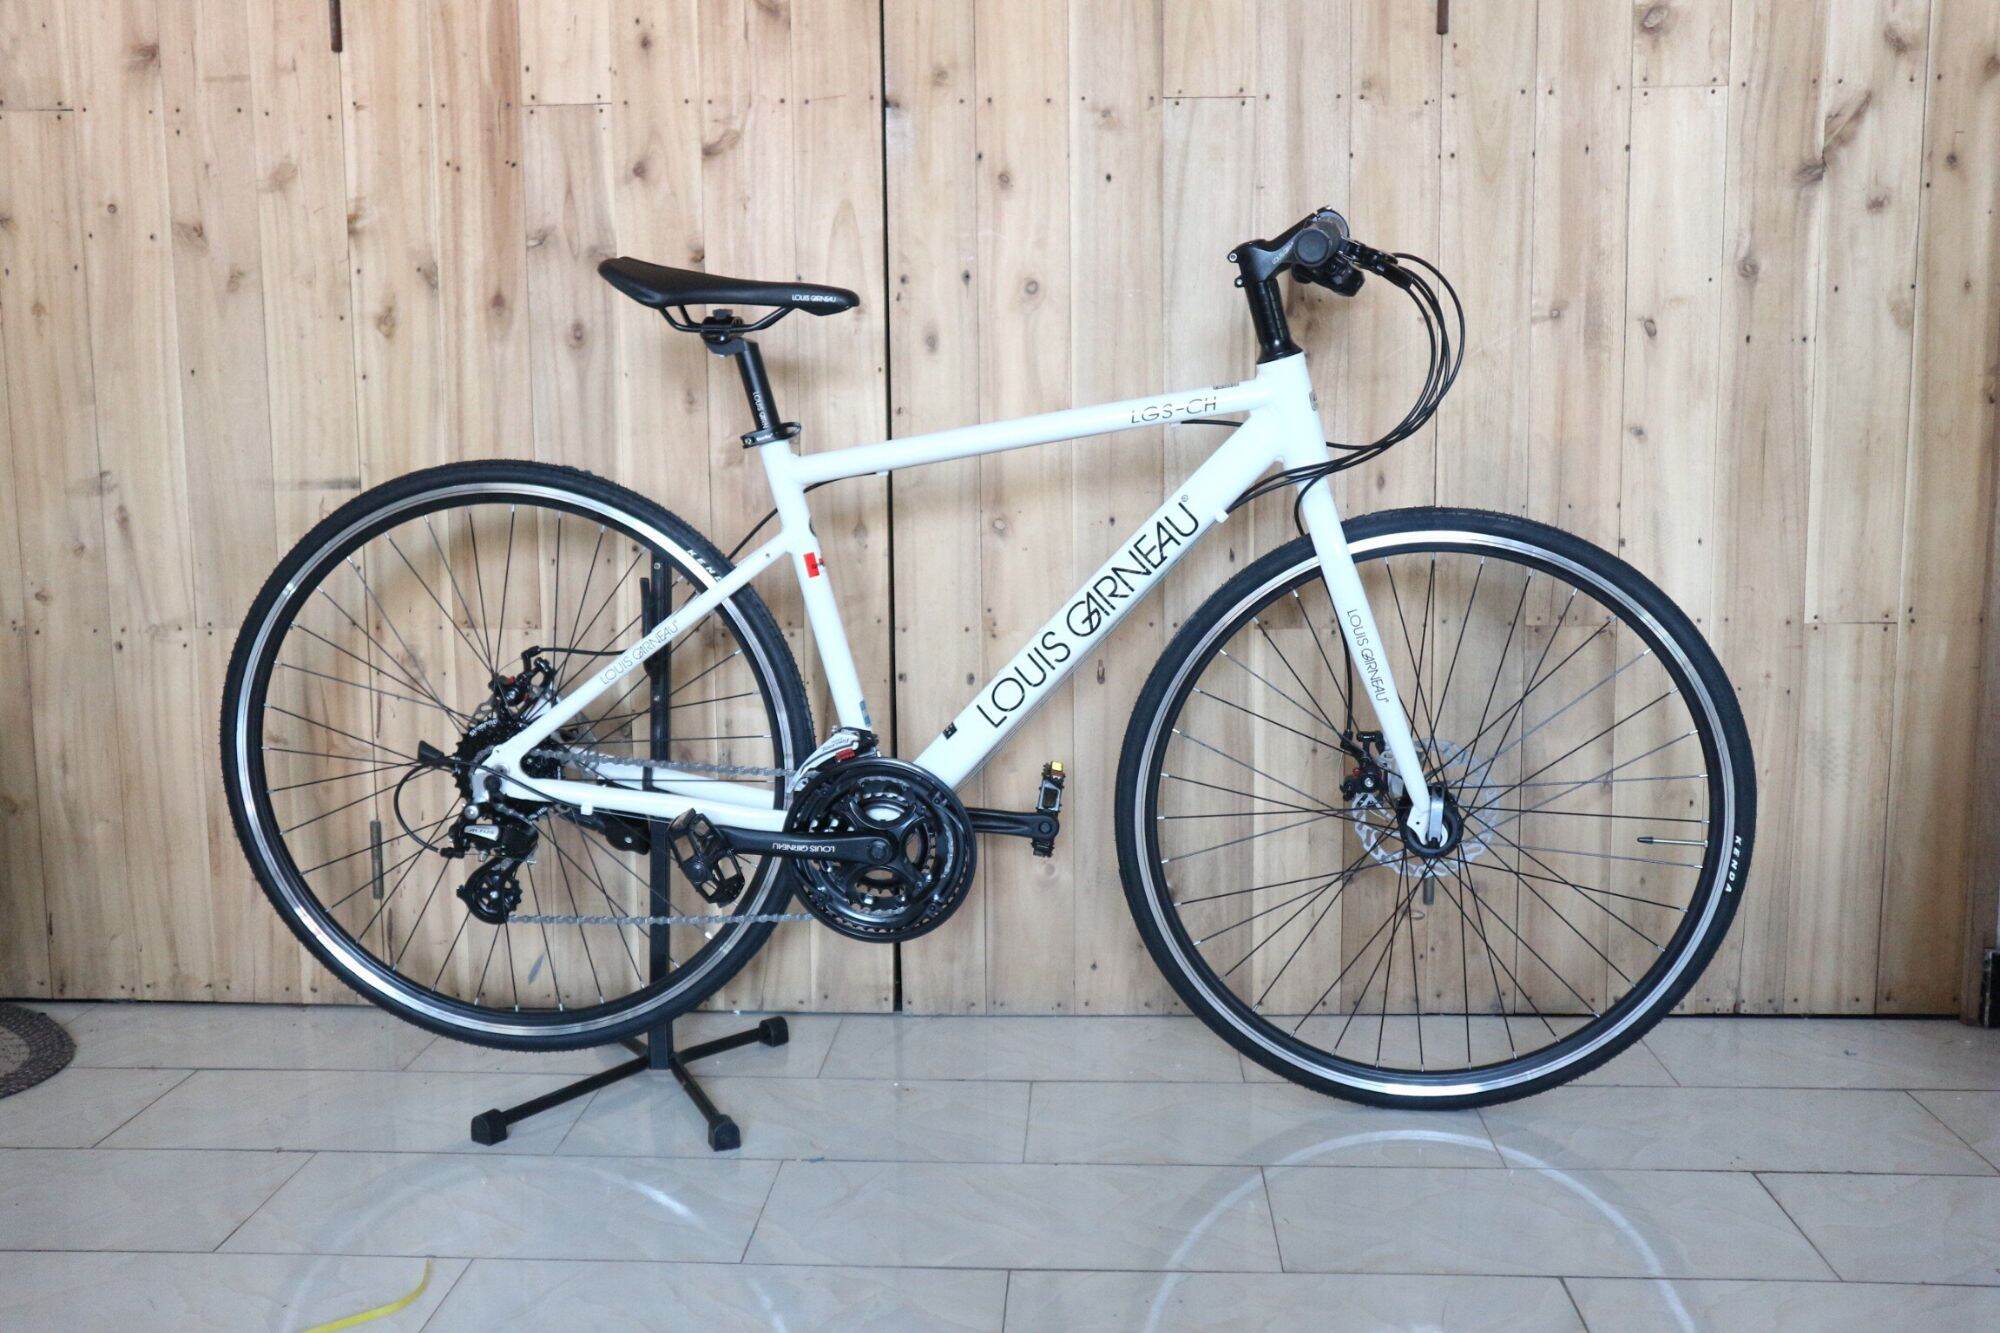 Mua xe đạp Louis garneu 2021 ( giá 5800)